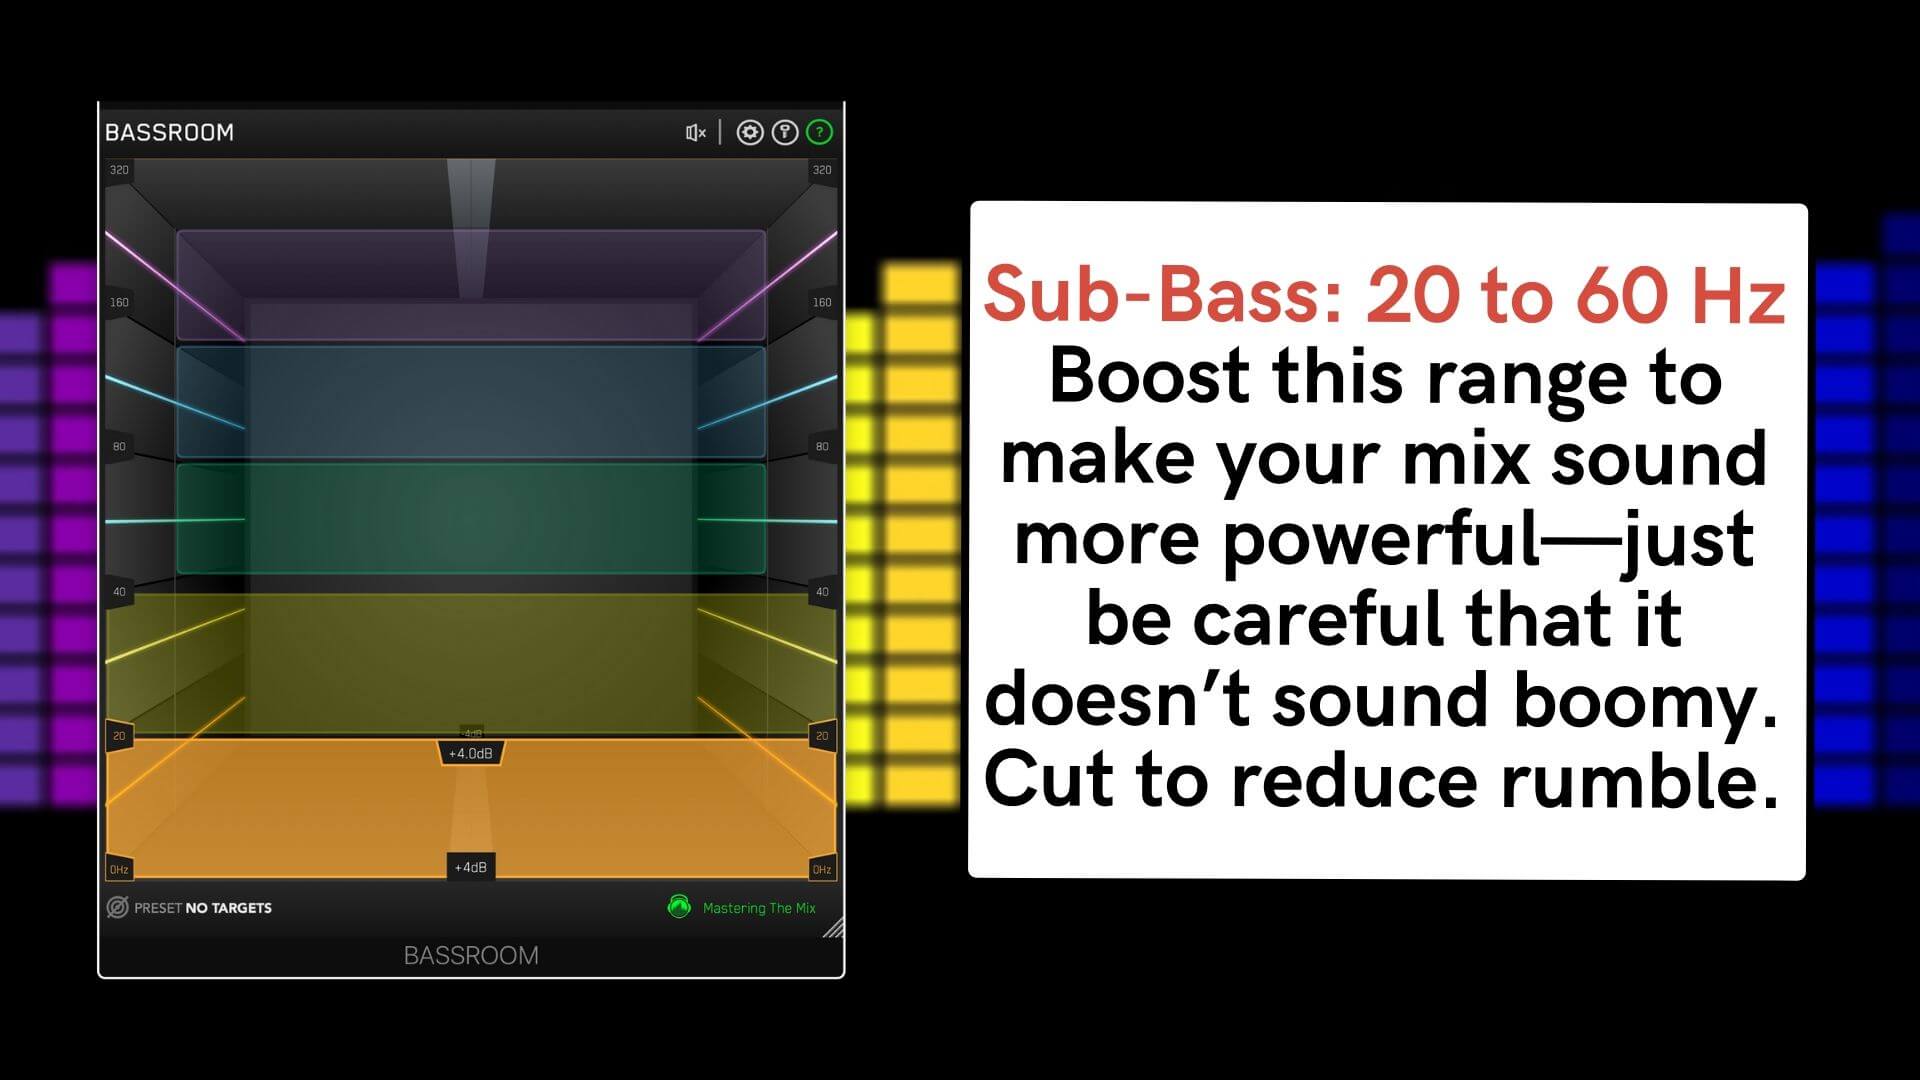 Sub-Bass: 20 to 60 Hz